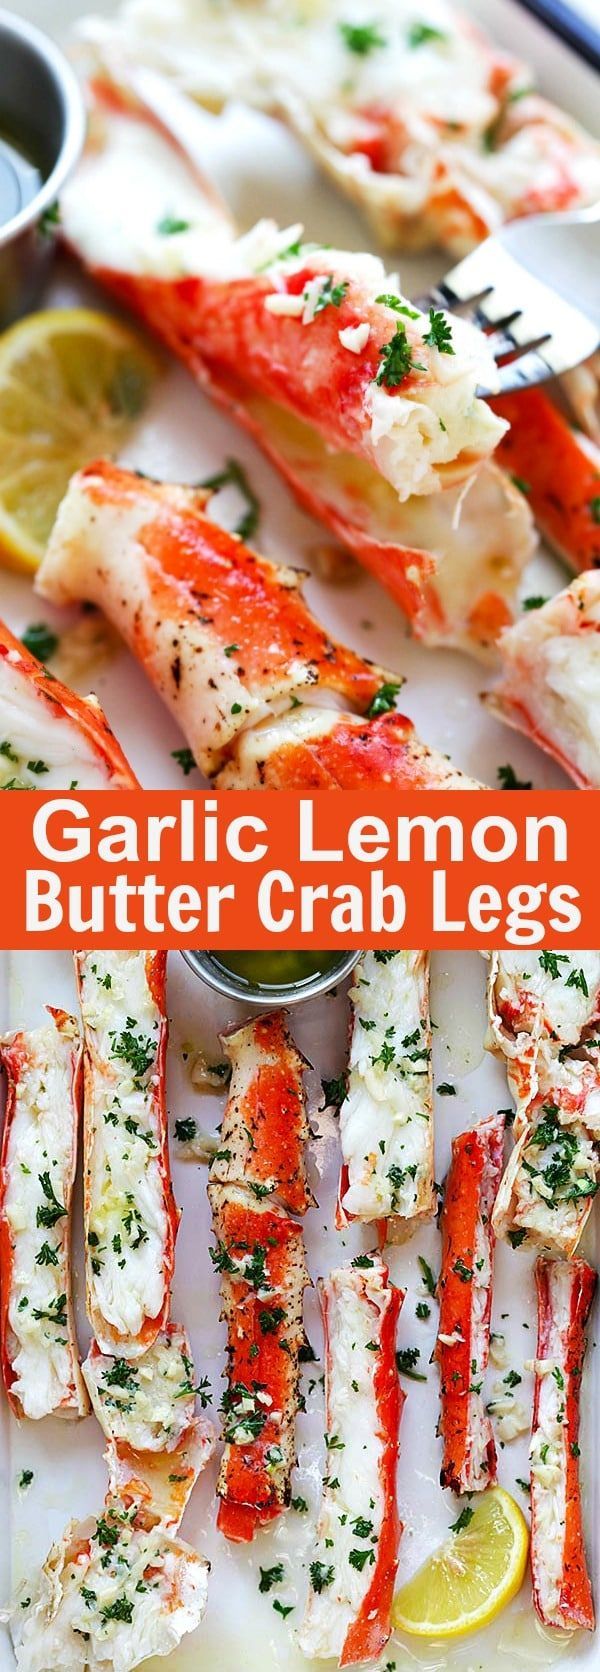 Garlic Lemon Butter Crab Legs – crazy delicious king crab legs in garlic herb and lemon butter. This crab legs recipe is so good